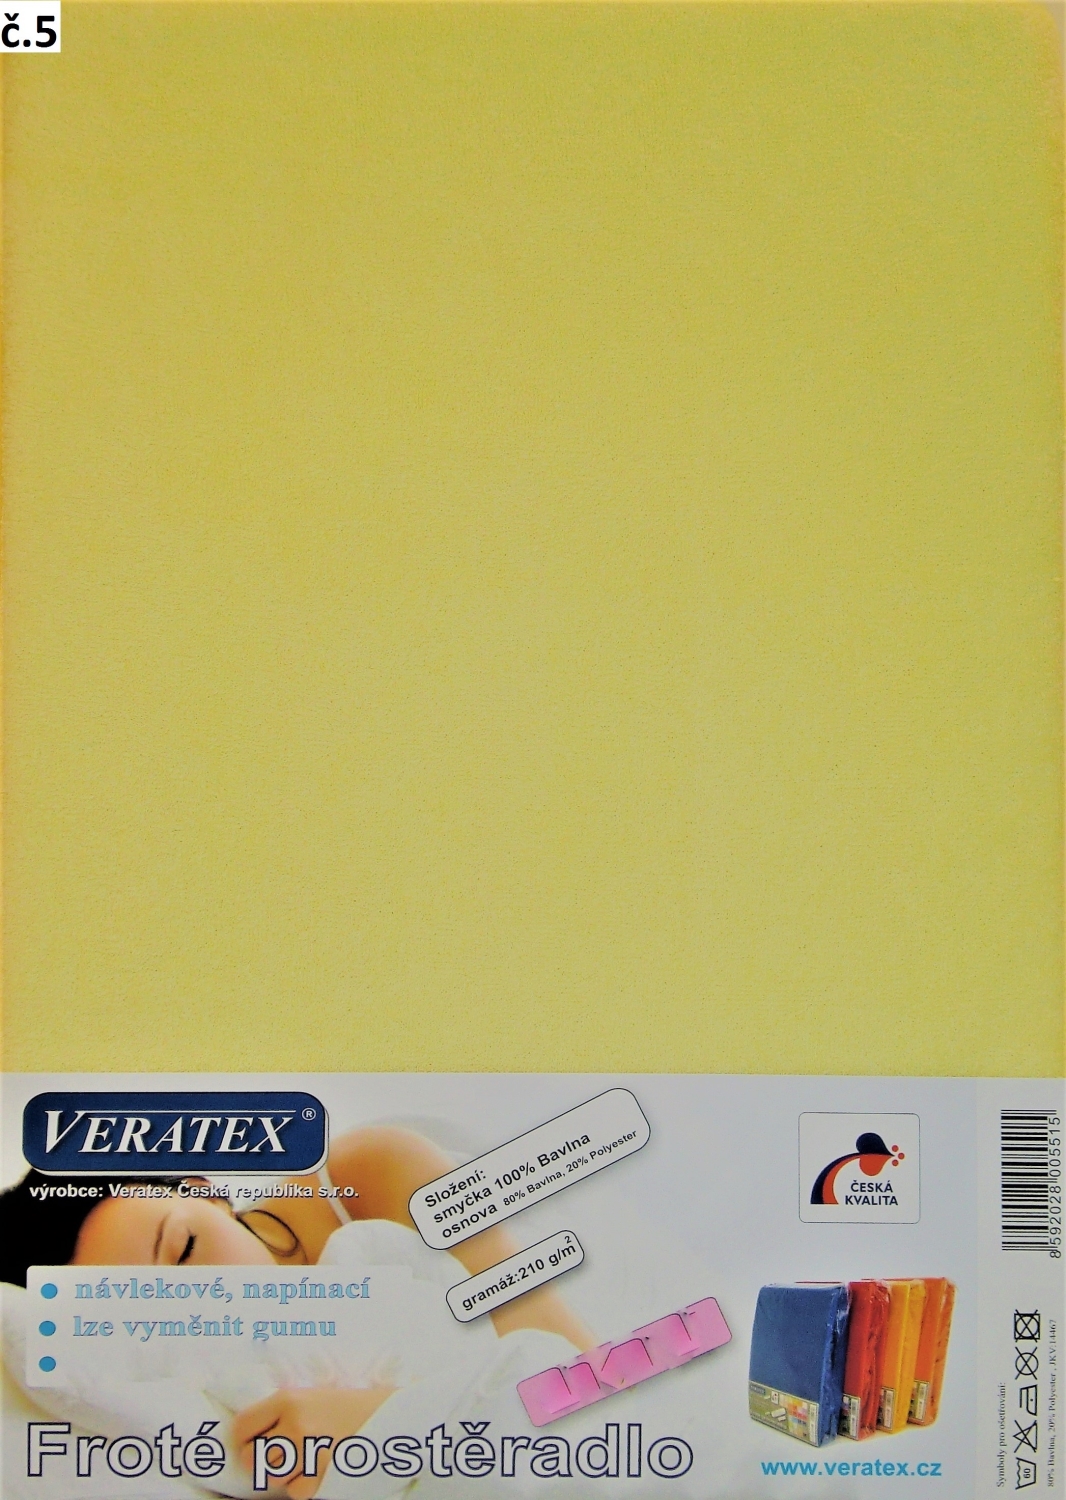 Veratex Froté prostěradlo postýlka 70x160/15 cm (č. 5-sv.žlutá)